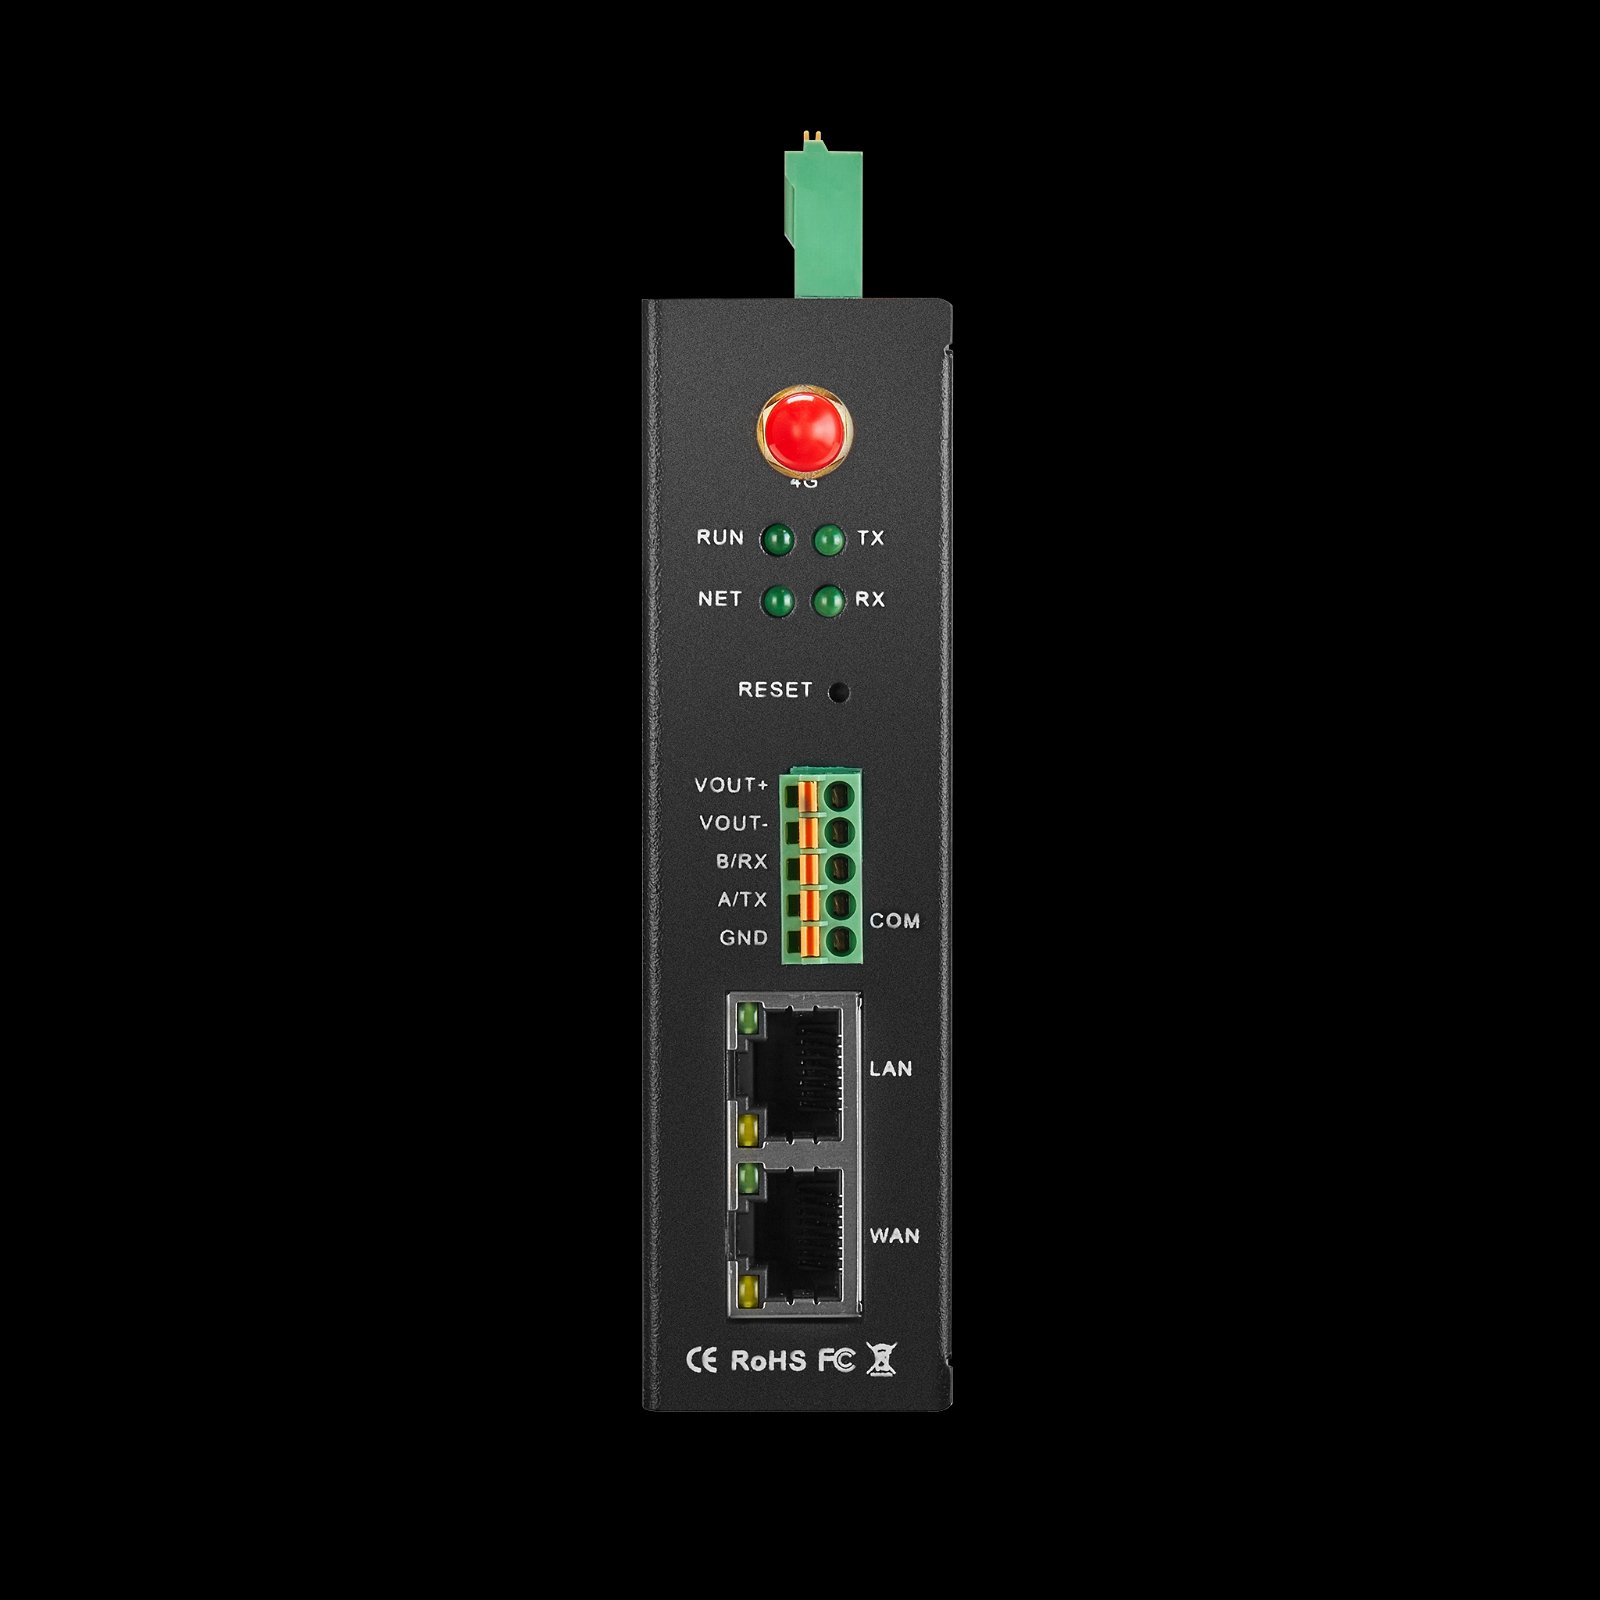 Modbus Gateway for PLC program Wireless Remote Upload and Download